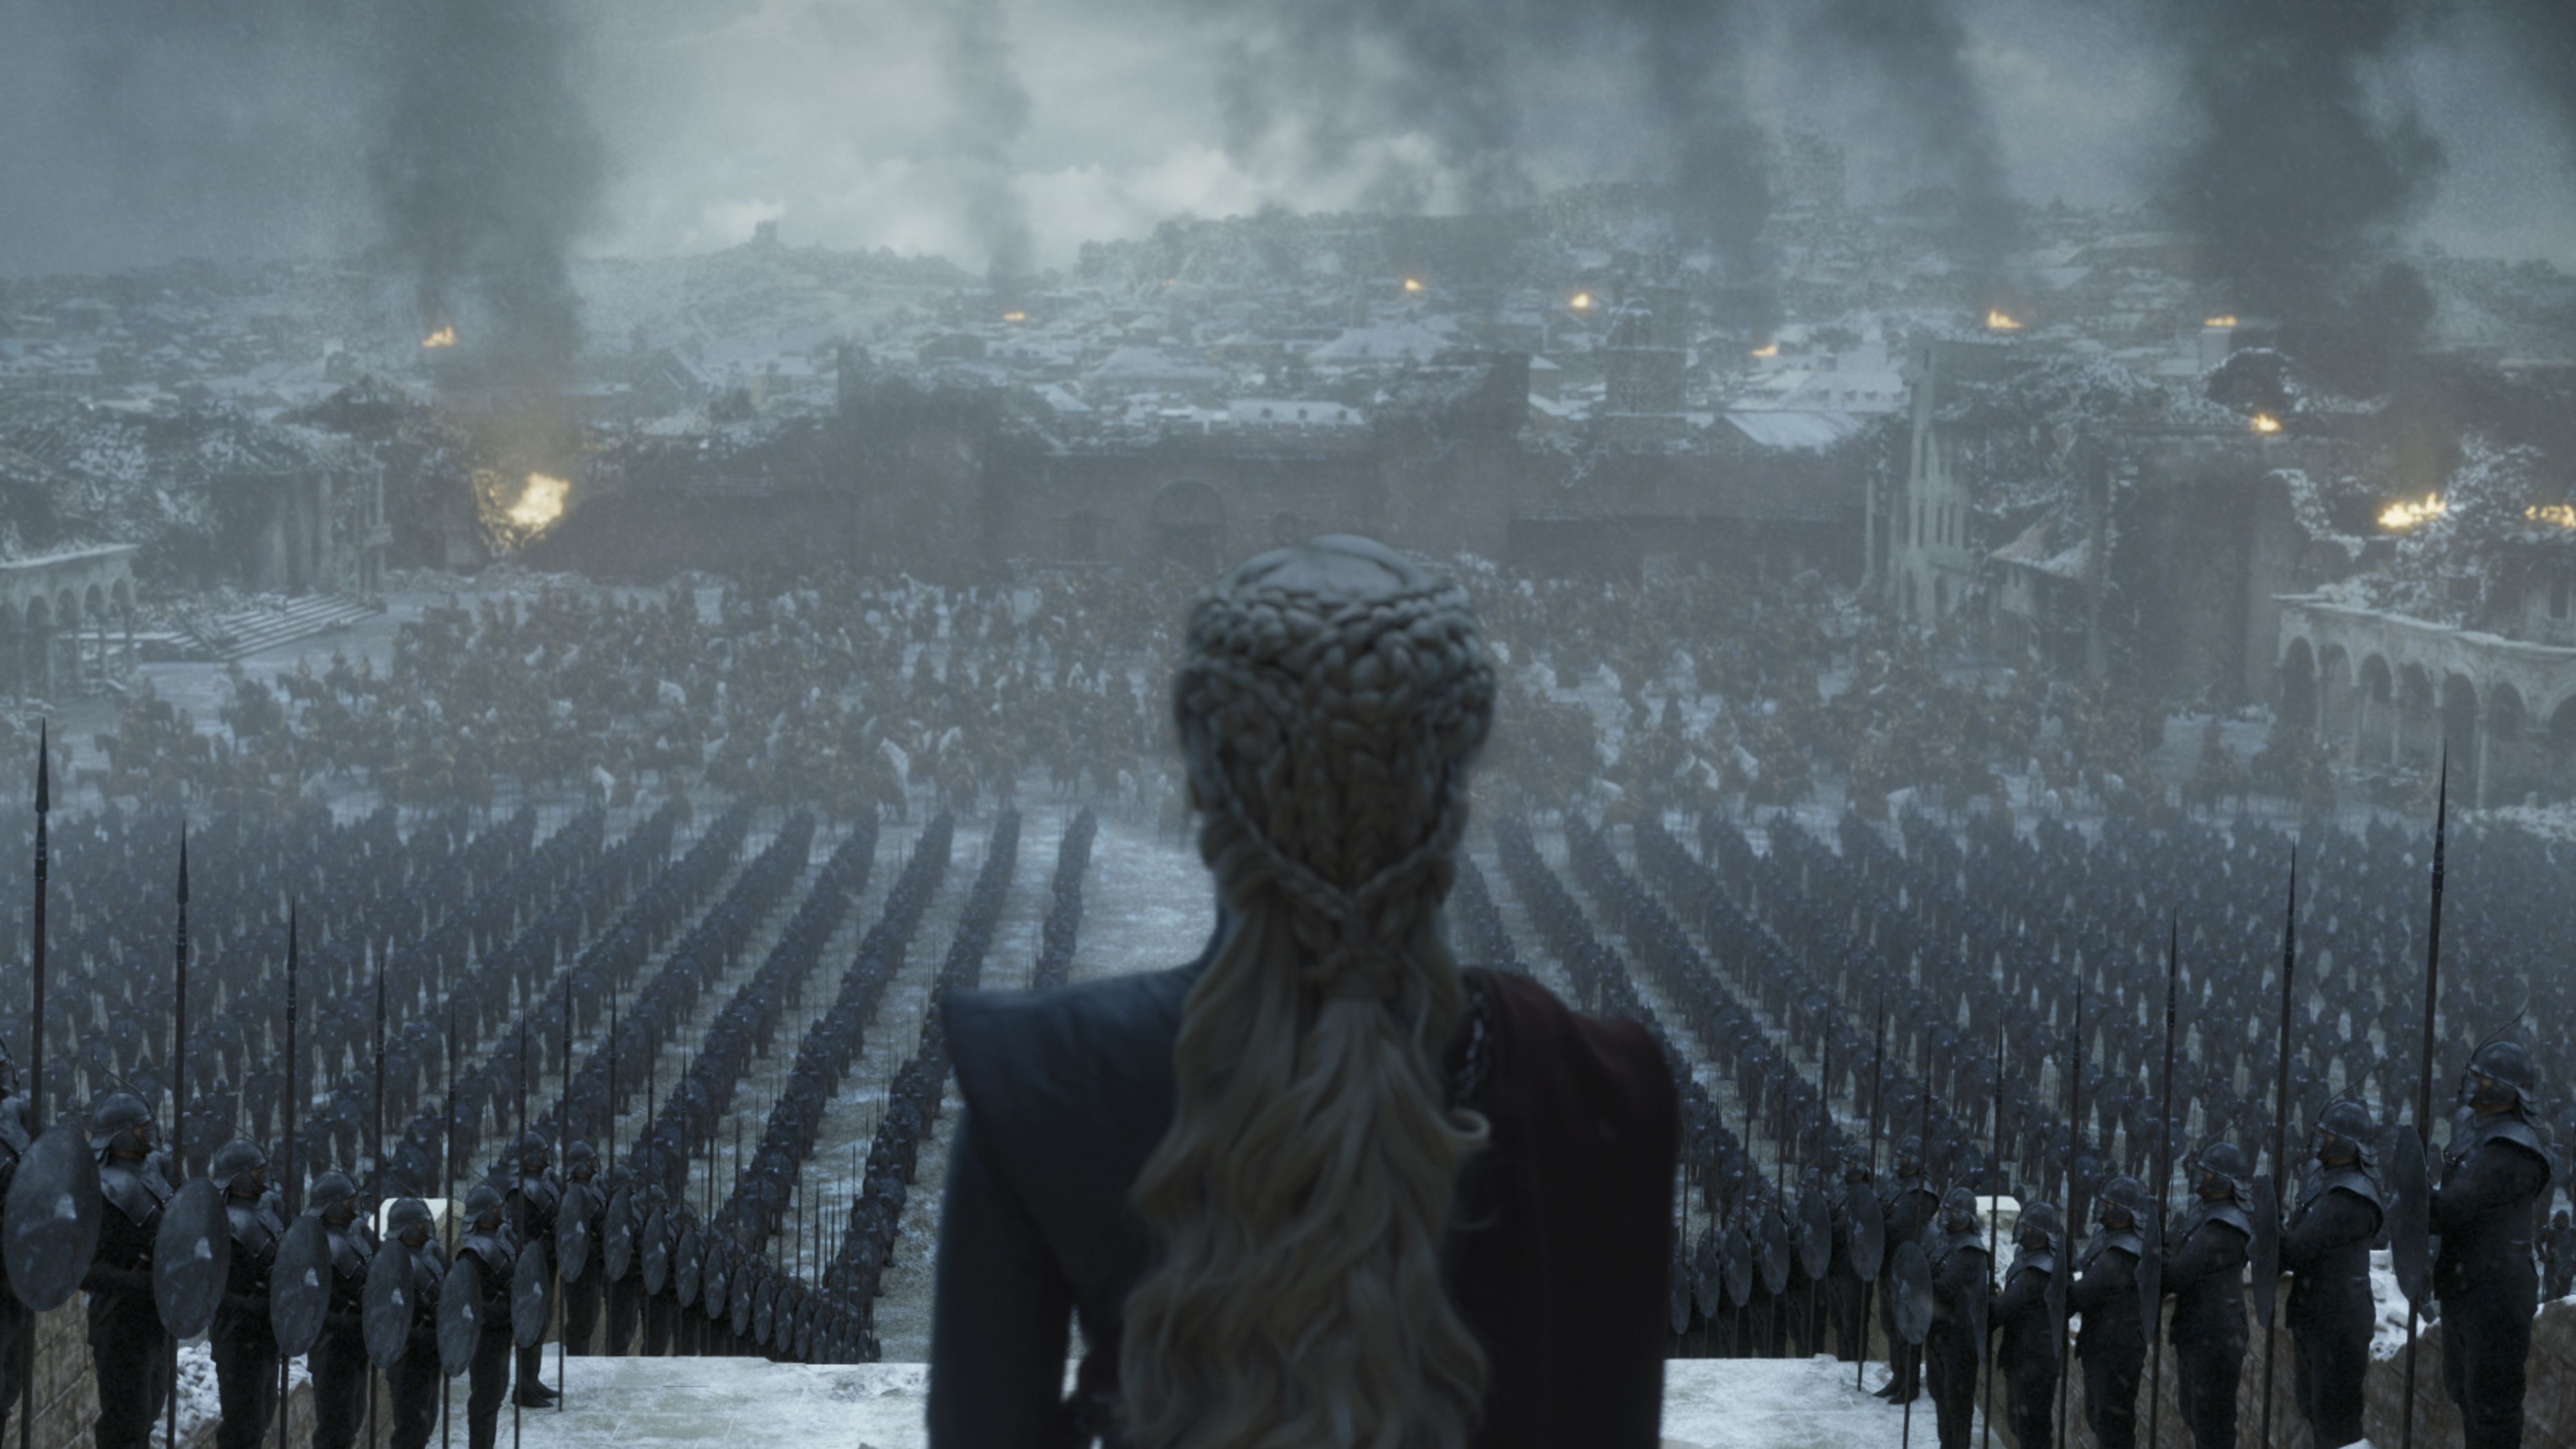 8 próximos programas da HBO que podem substituir 'Game of Thrones